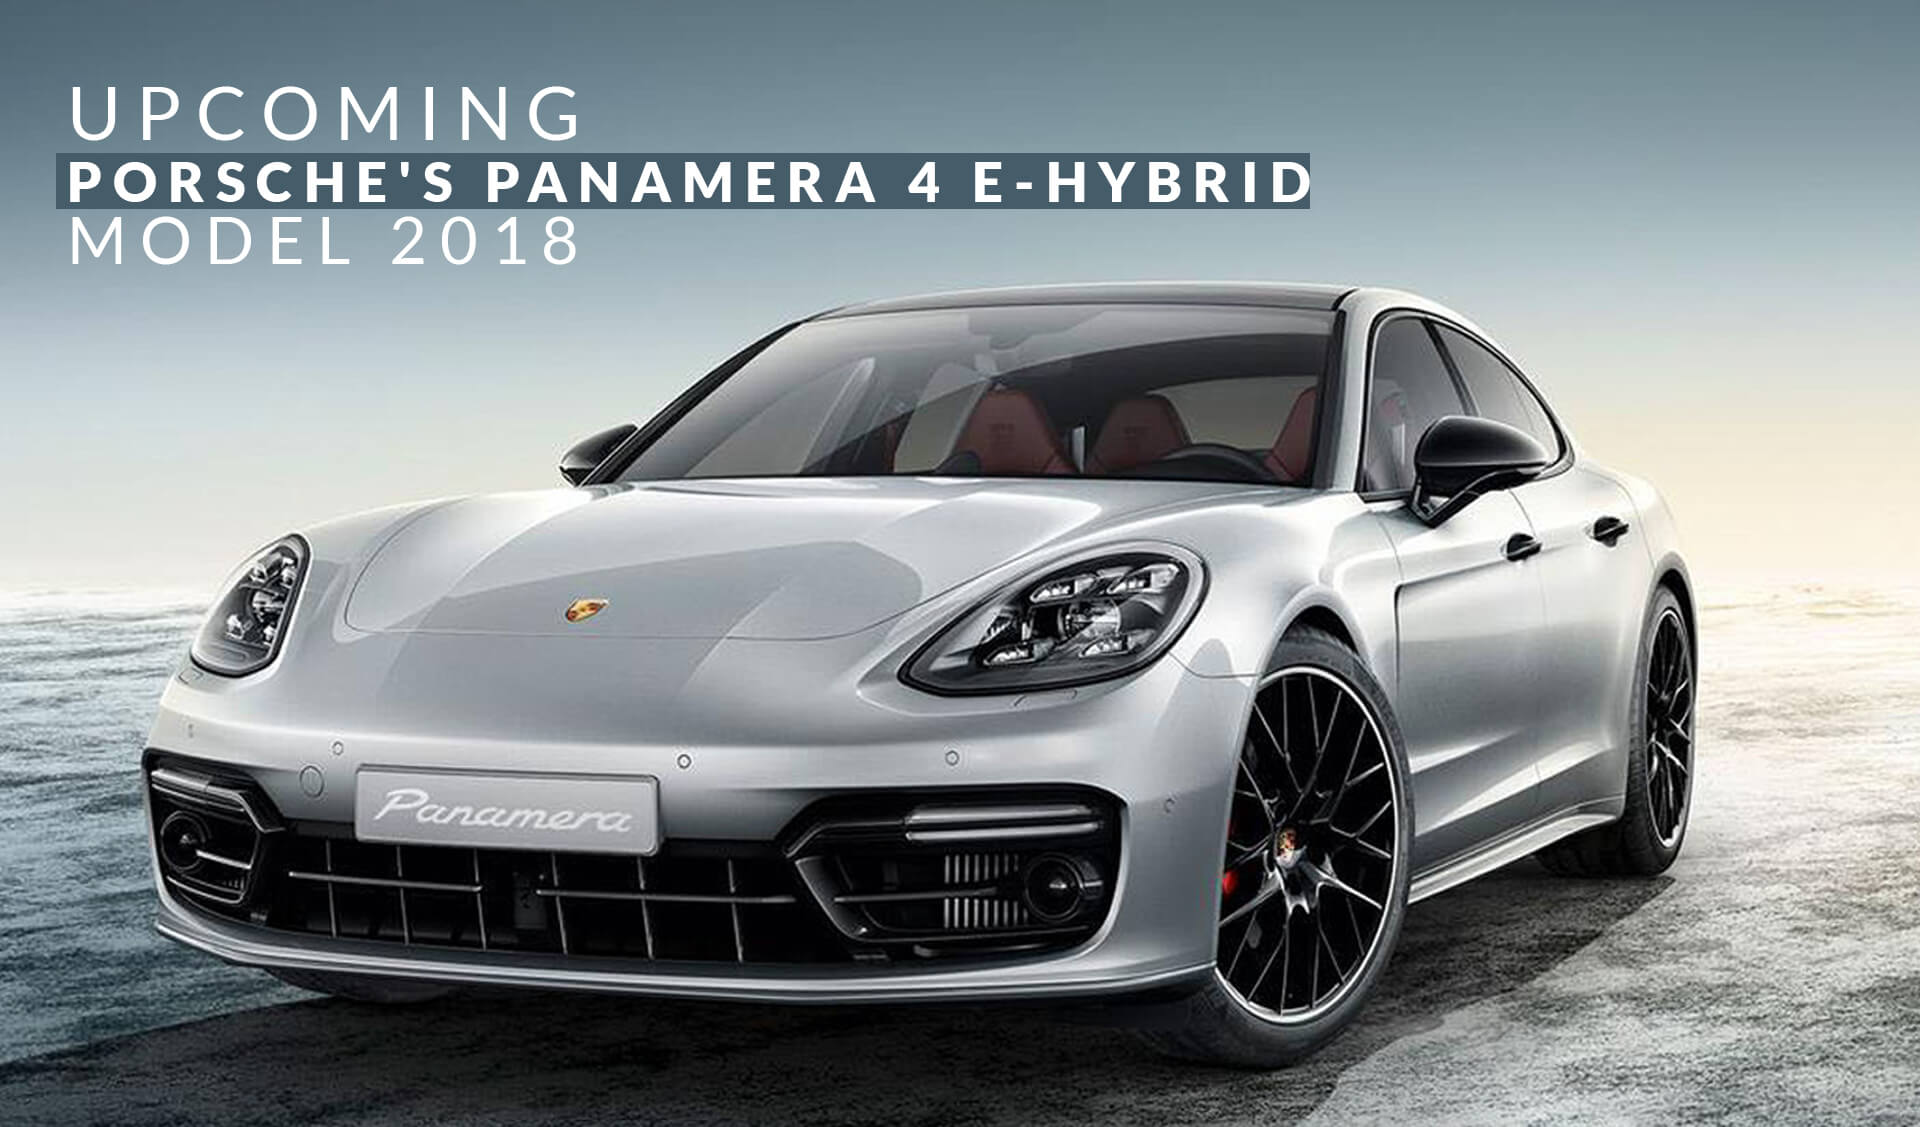 Upcoming Porsche's Panamera 4 E-Hybrid Model 2018